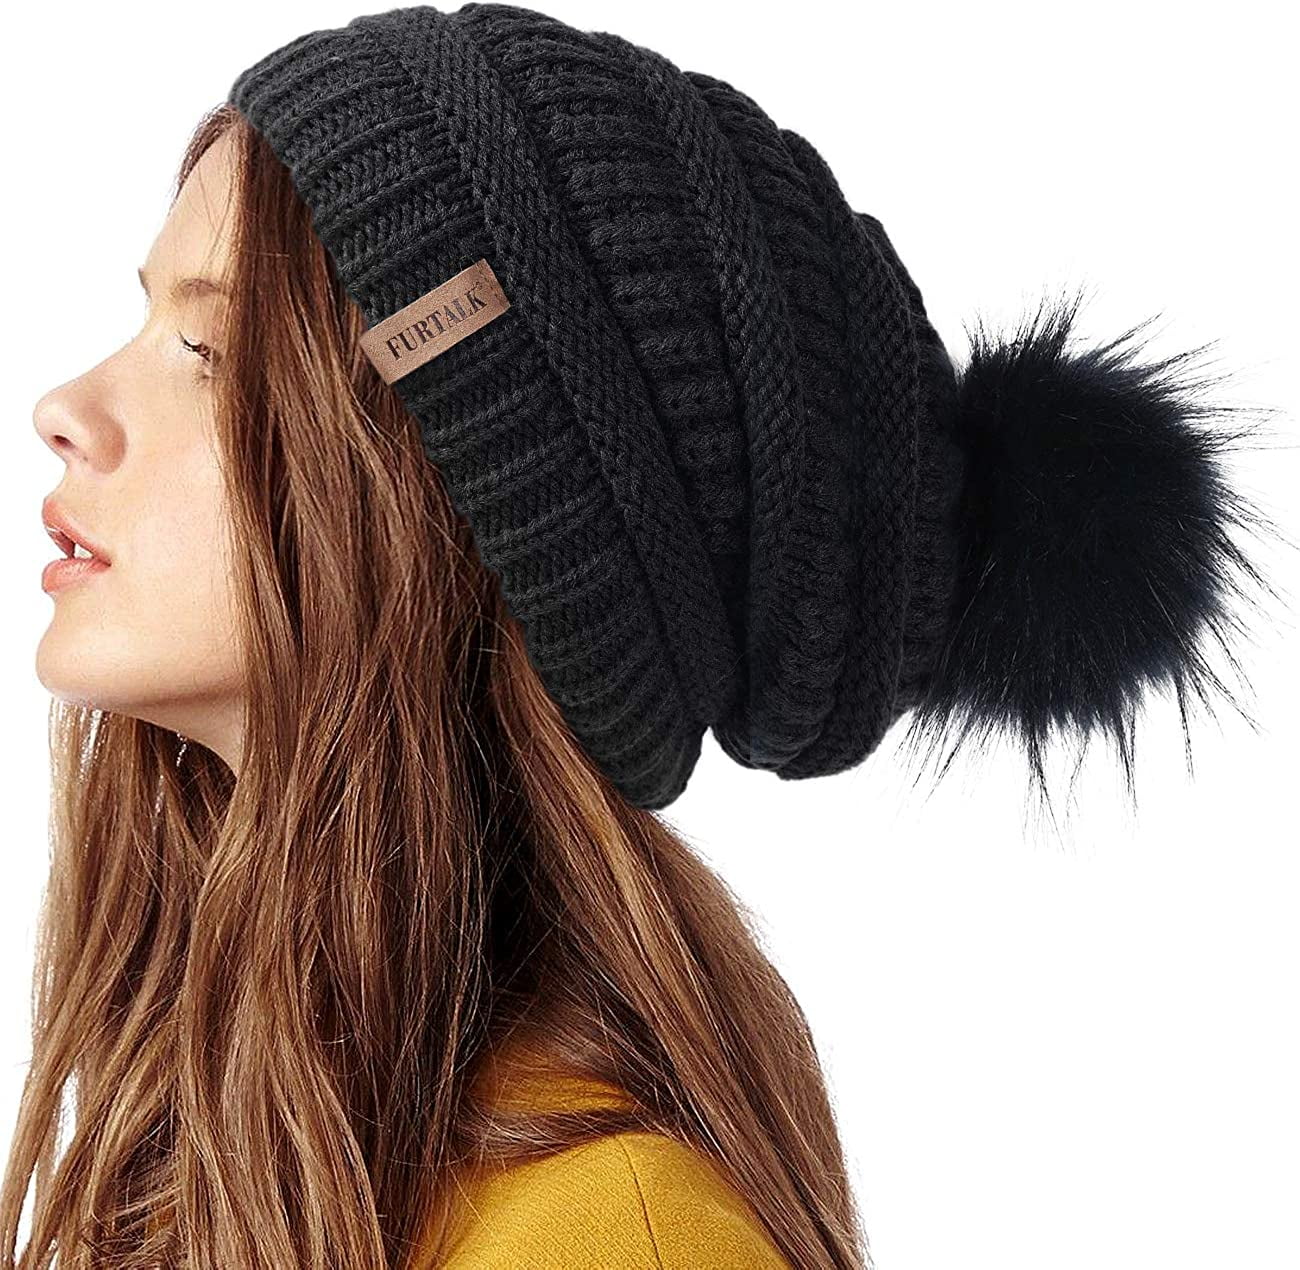 snowboard/cold weather/resort/headwear/warm/protection/cap Craft Sportswear Big Logo Knit Soft Beanie Hat 